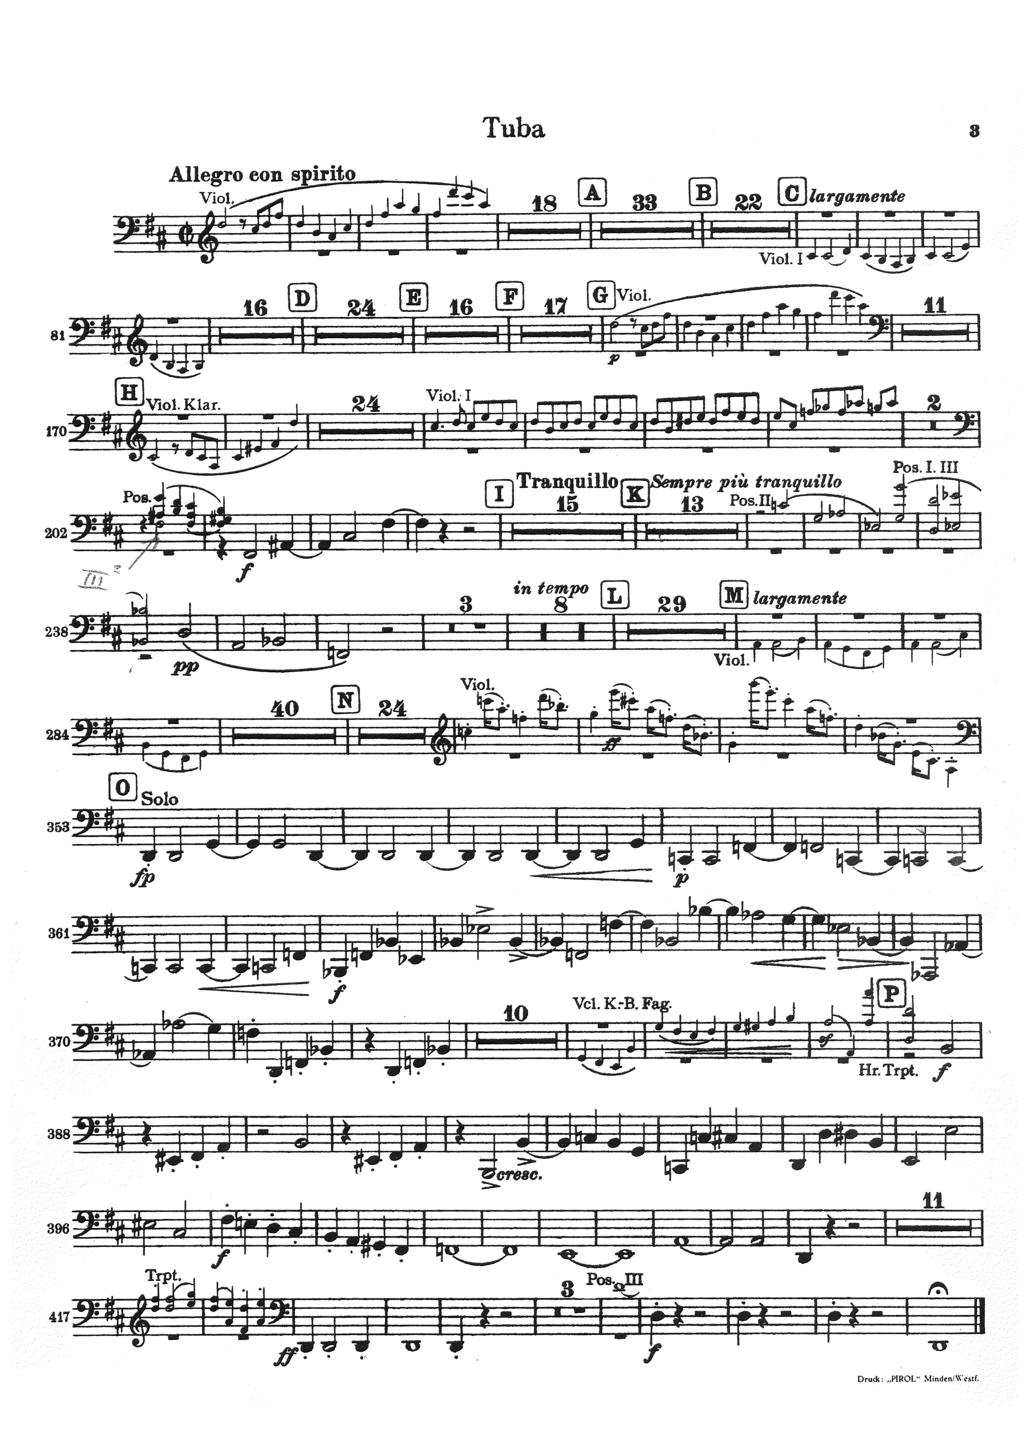 BRAHMS Symphony no. 2 Tuba 3 Movement 4 ( B) 22 [QJ1argamente Viol I J, {g V!Tl Tranquillor;;i&mpre piu tranquil lo ~ 15 l:!::j 13 Pos.